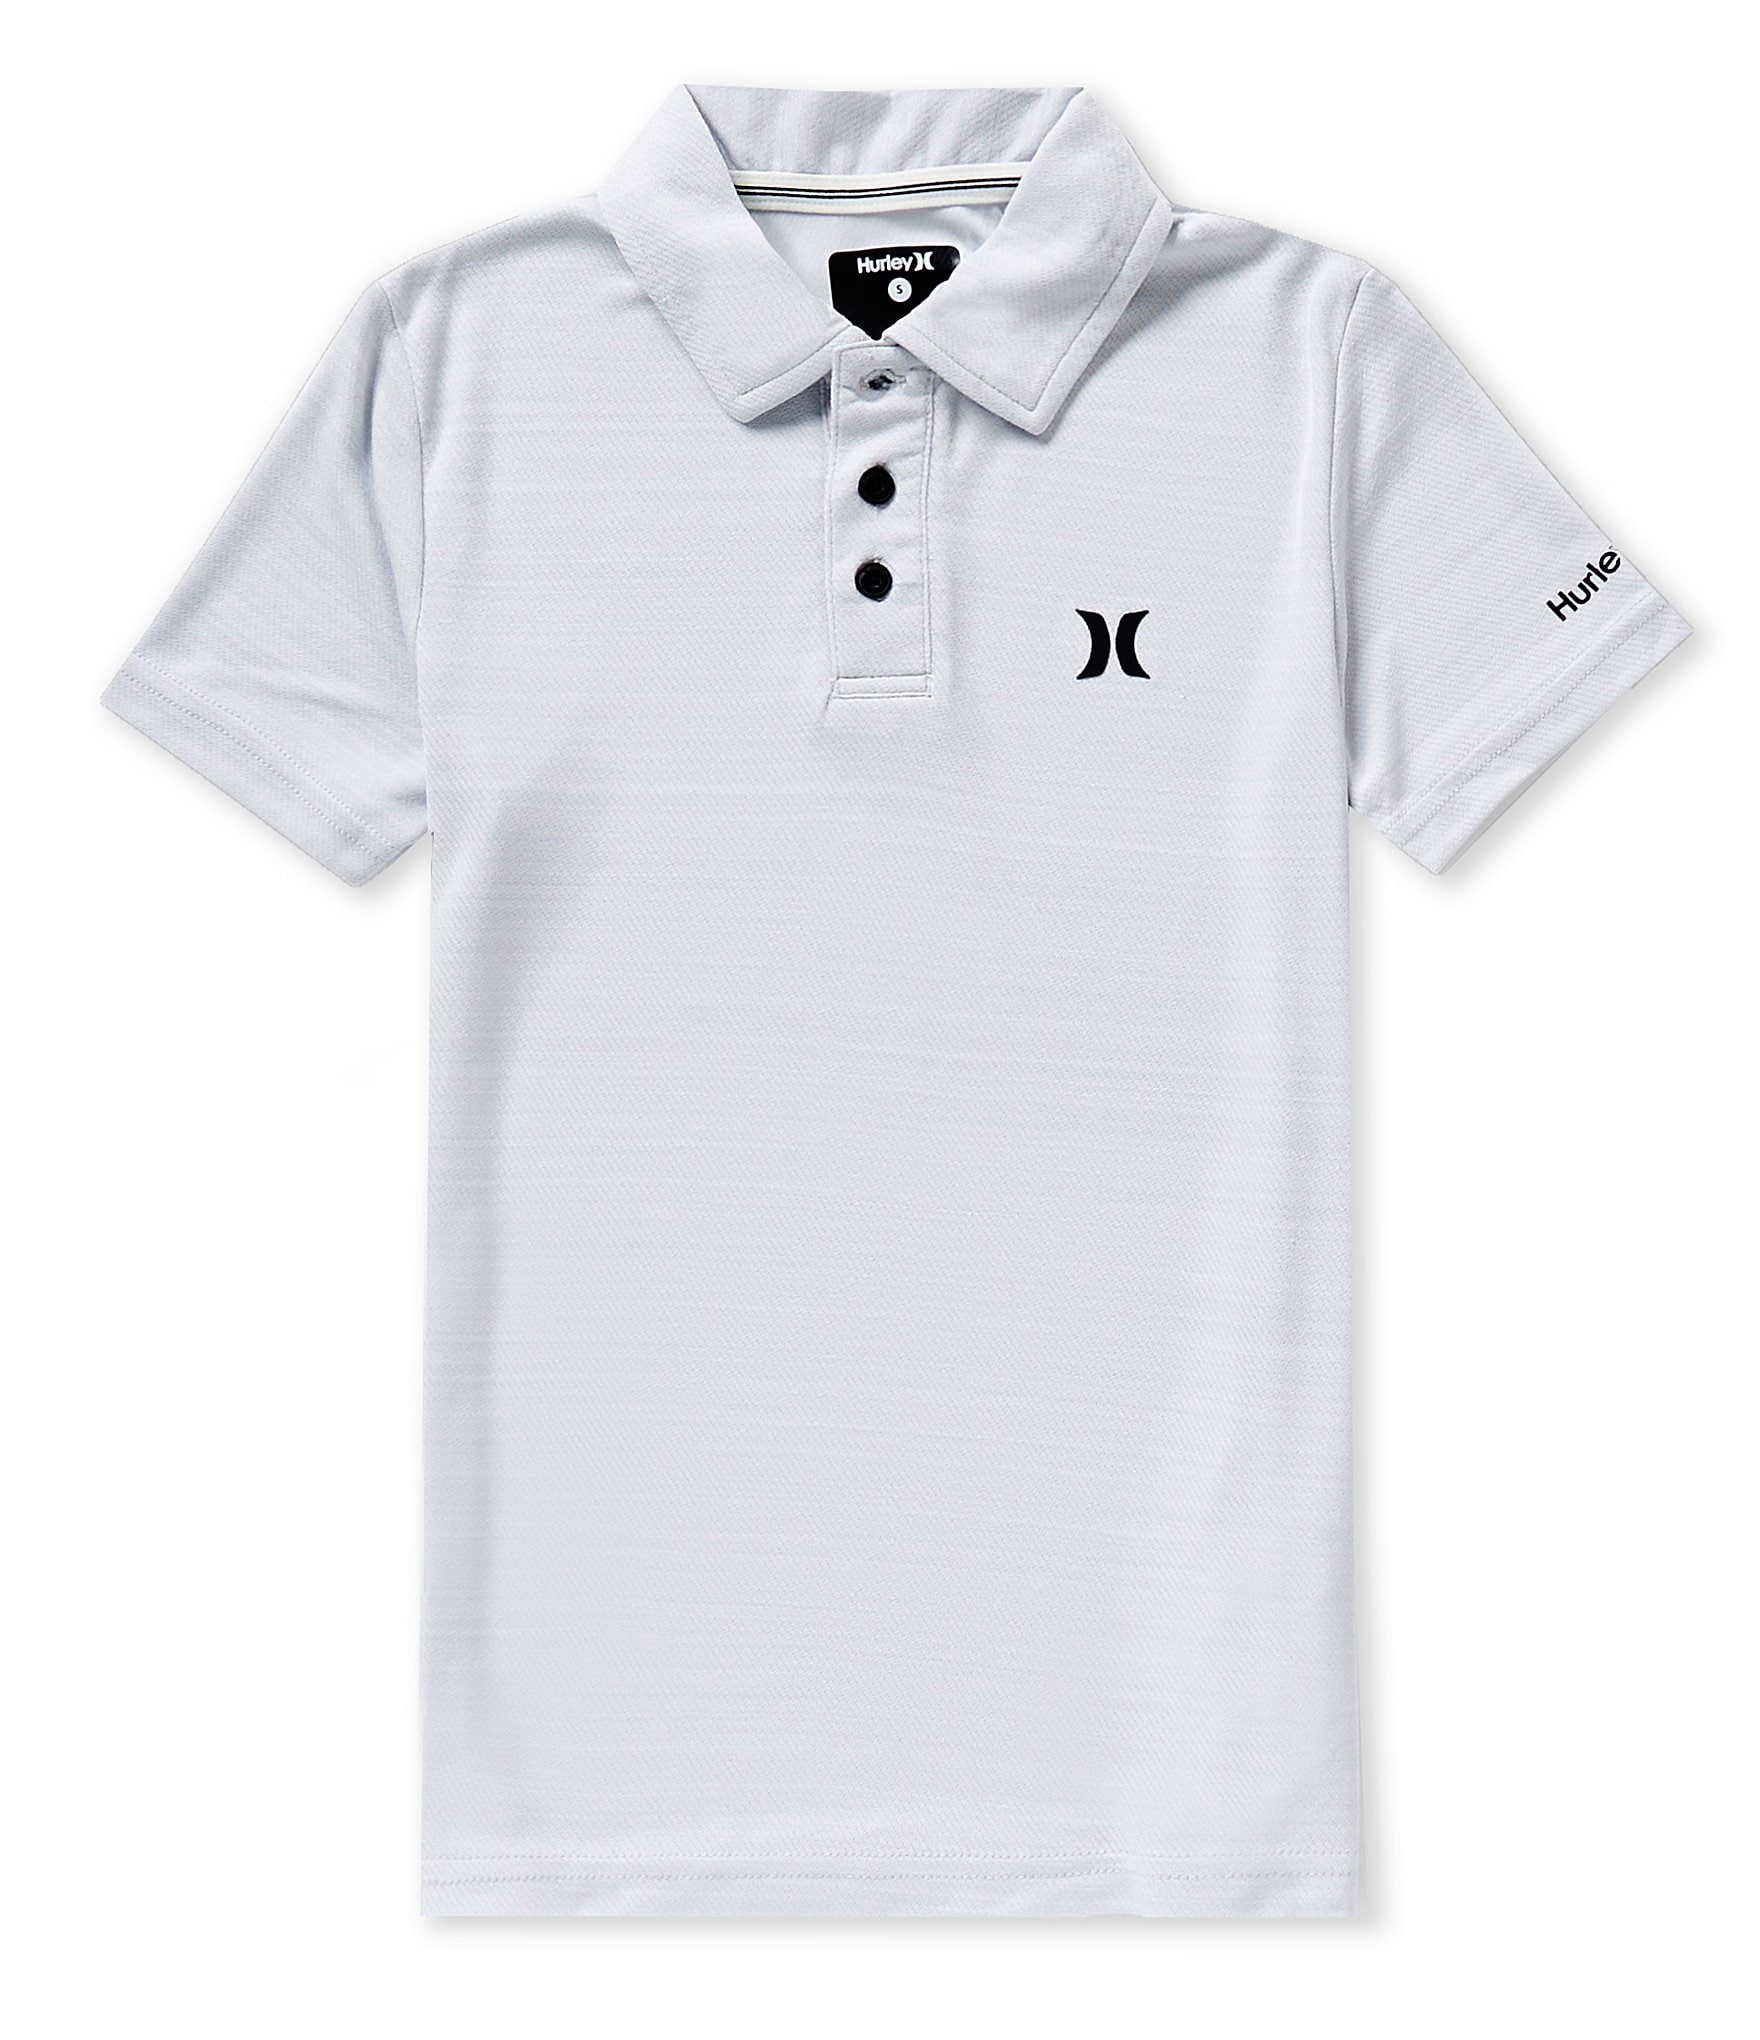 Polo Ralph Lauren Little Boys 2T-7 Short-Sleeve Essential V-Neck T-Shirt